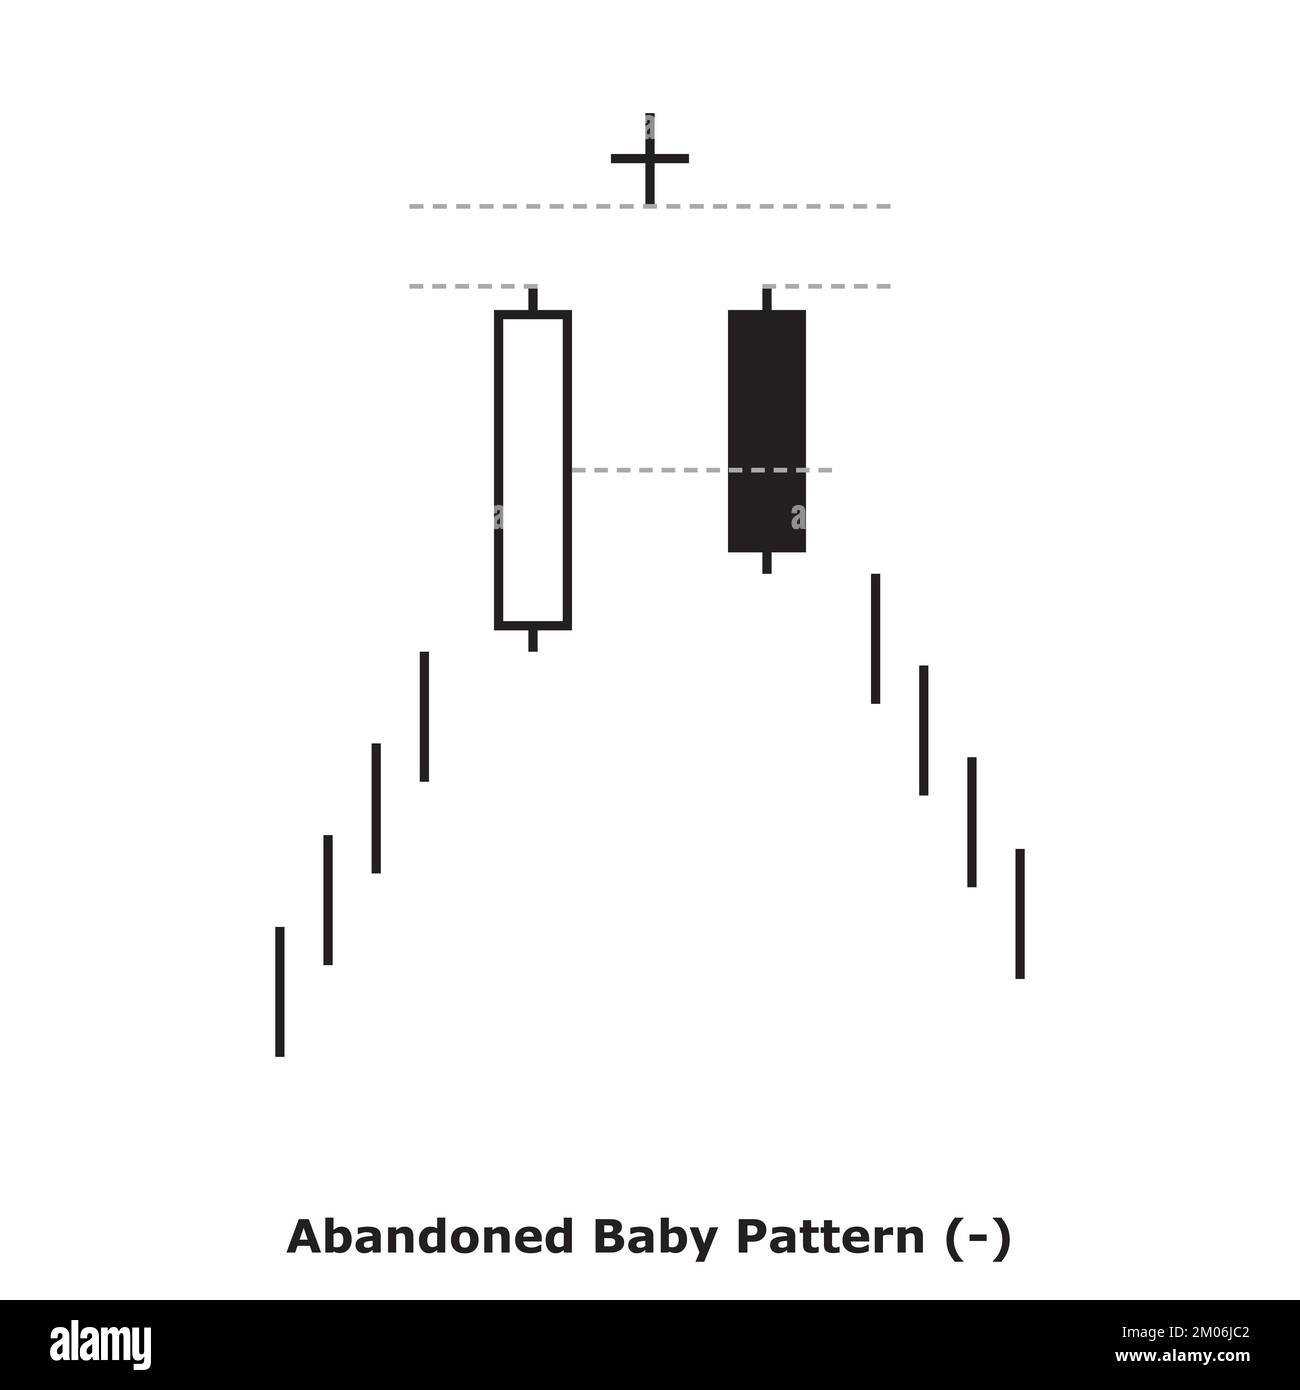 792Abandoned Baby Pattern - Bearish - White & Black - Square - Bearish Reversal Japanese Candlestick Pattern - Triple Patterns Stock Vector